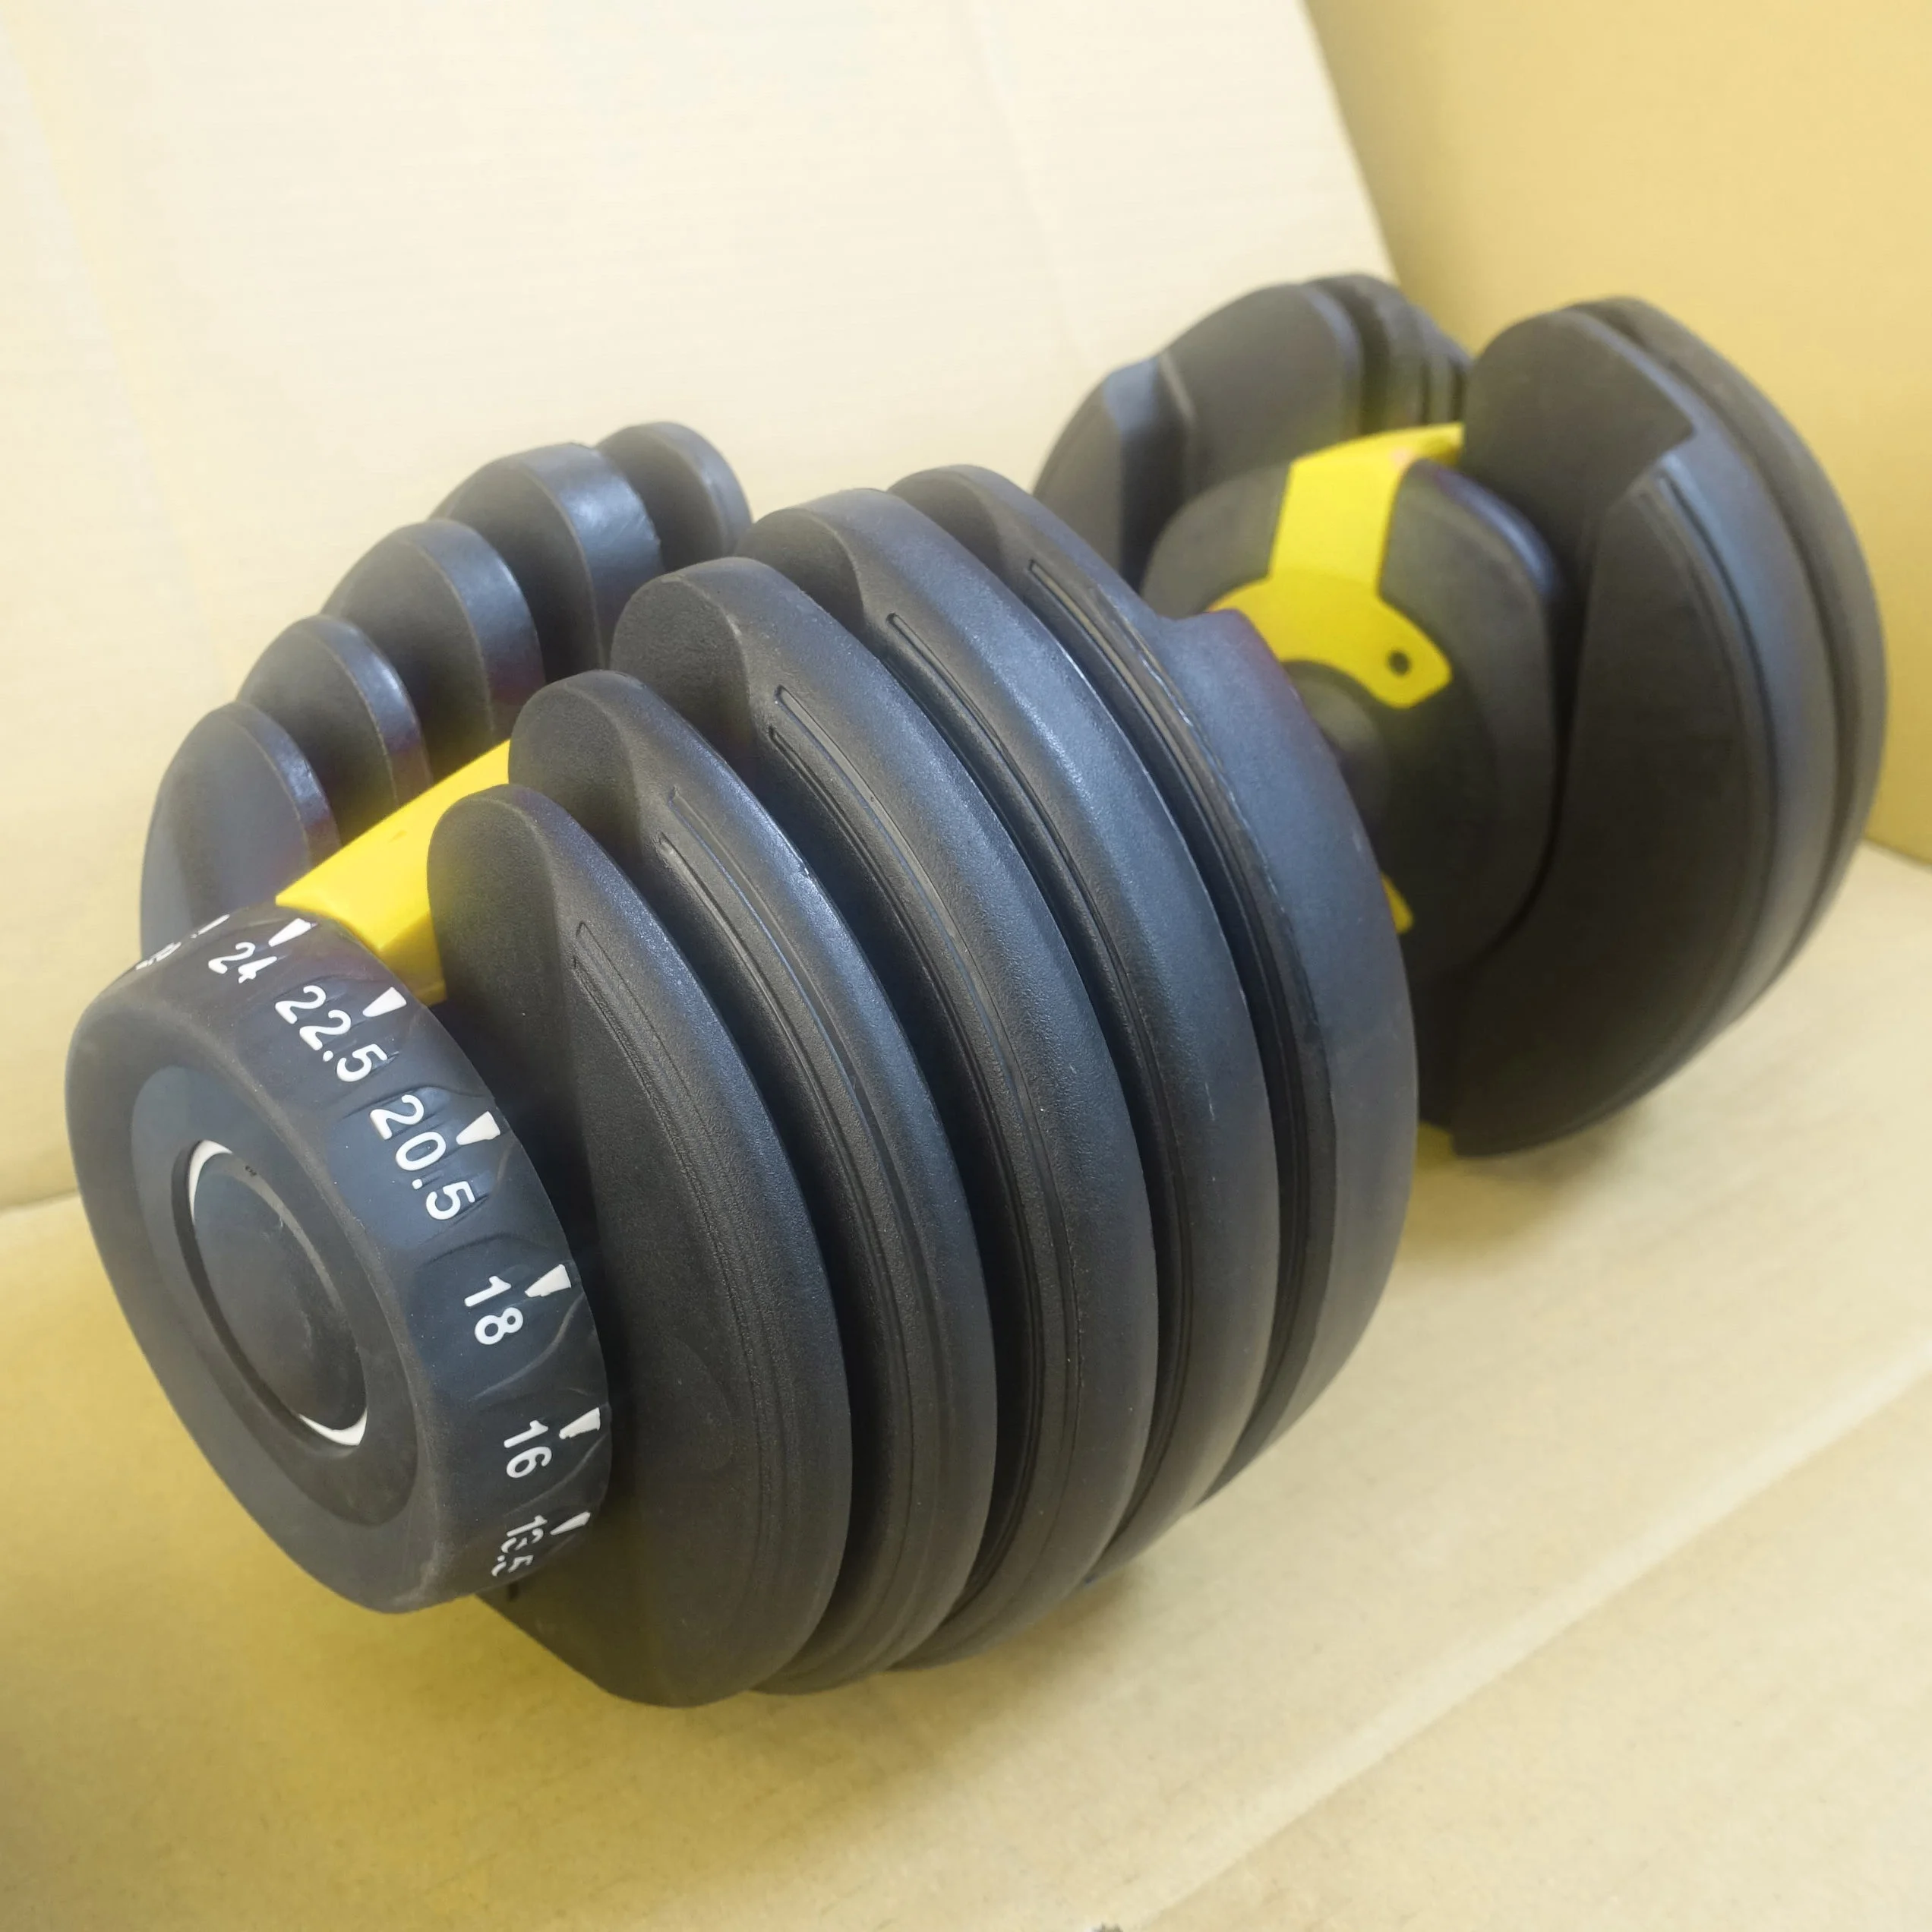 

Fitness home gym equipment 100 lb 32kg adjustable used dumbbell set for sale/pesas mancuernas de gym 50 kg for weight lifting, Black/blue